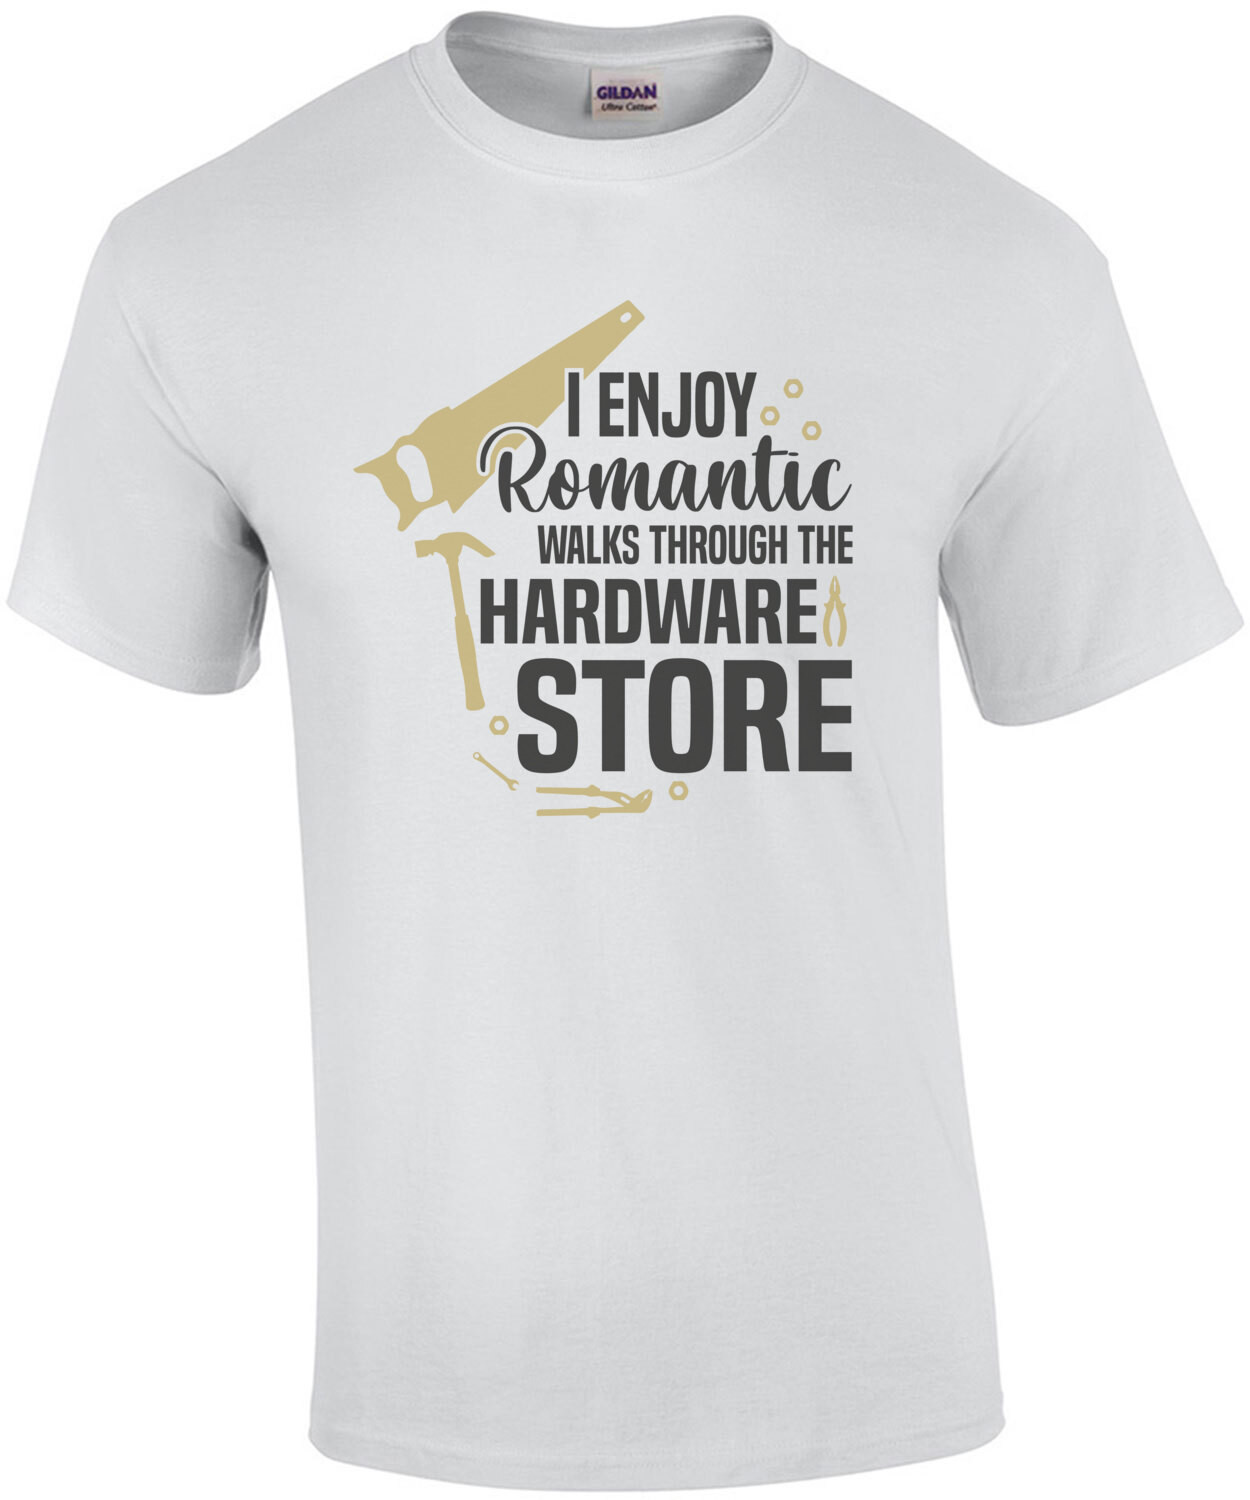 I enjoy romantic walks through the hardware store - funny t-shirt